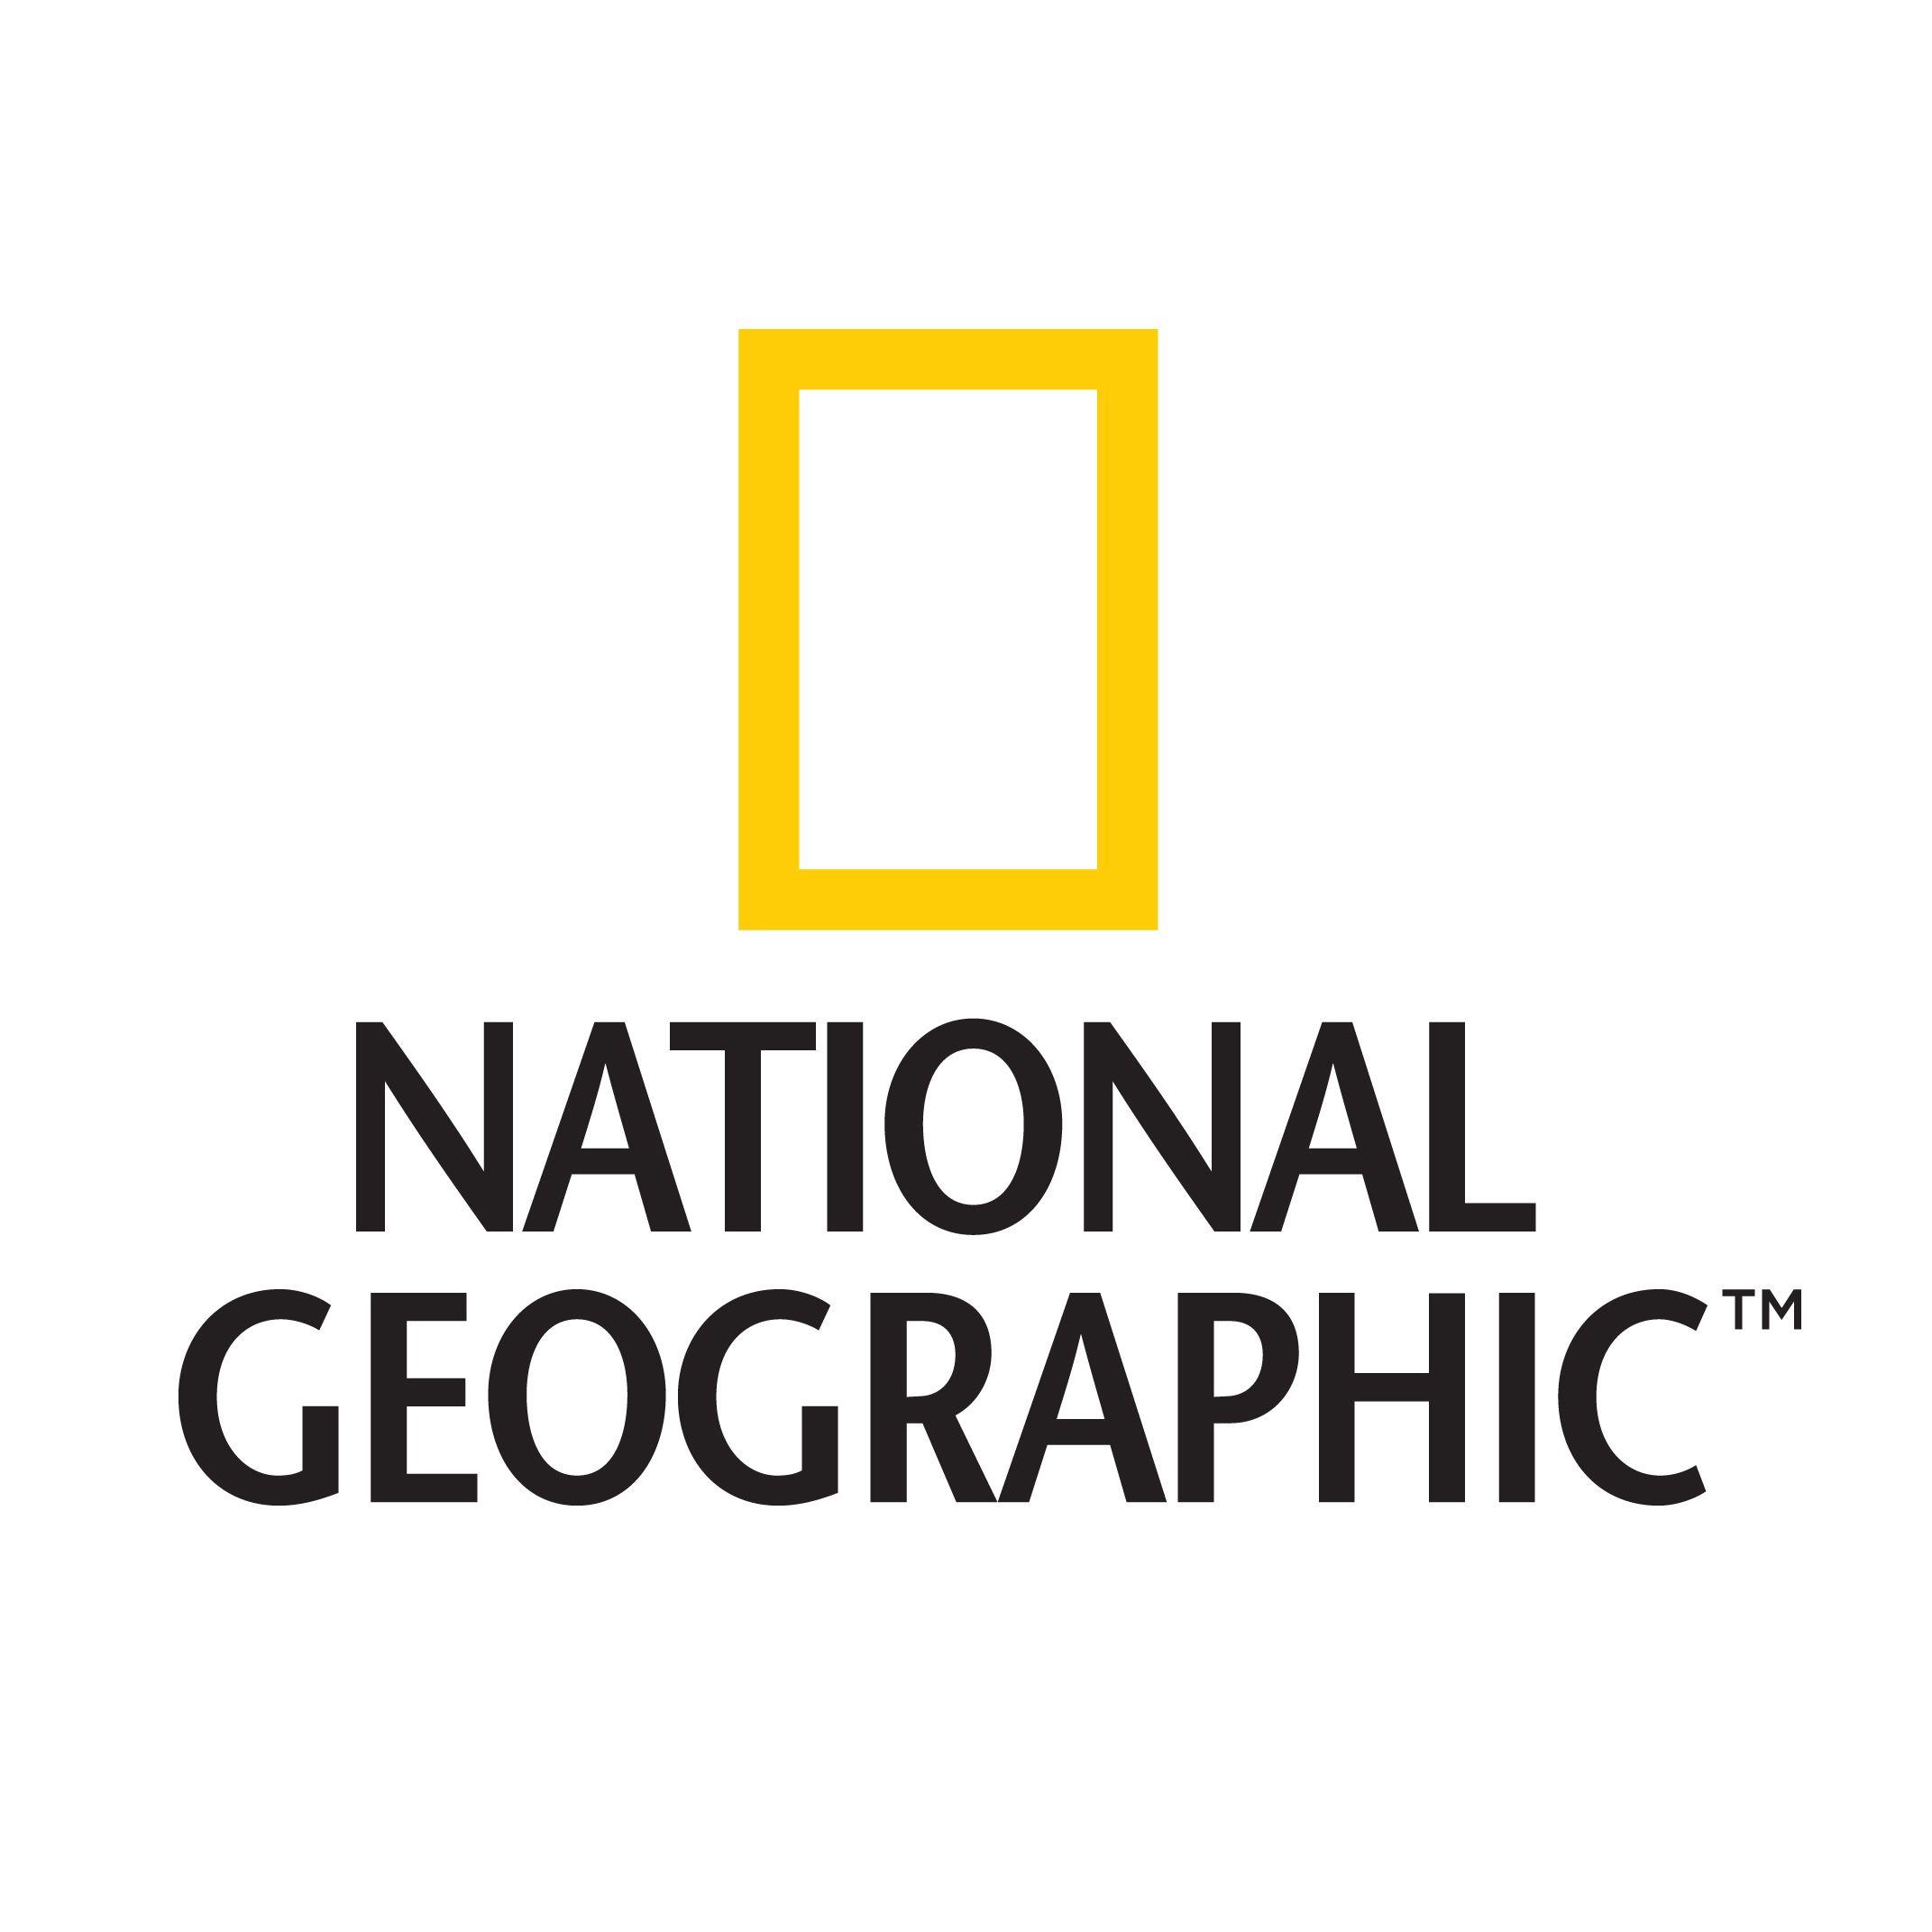 Nationalgeographic.com Logo - National Geographic - SKY Ocean Ventures